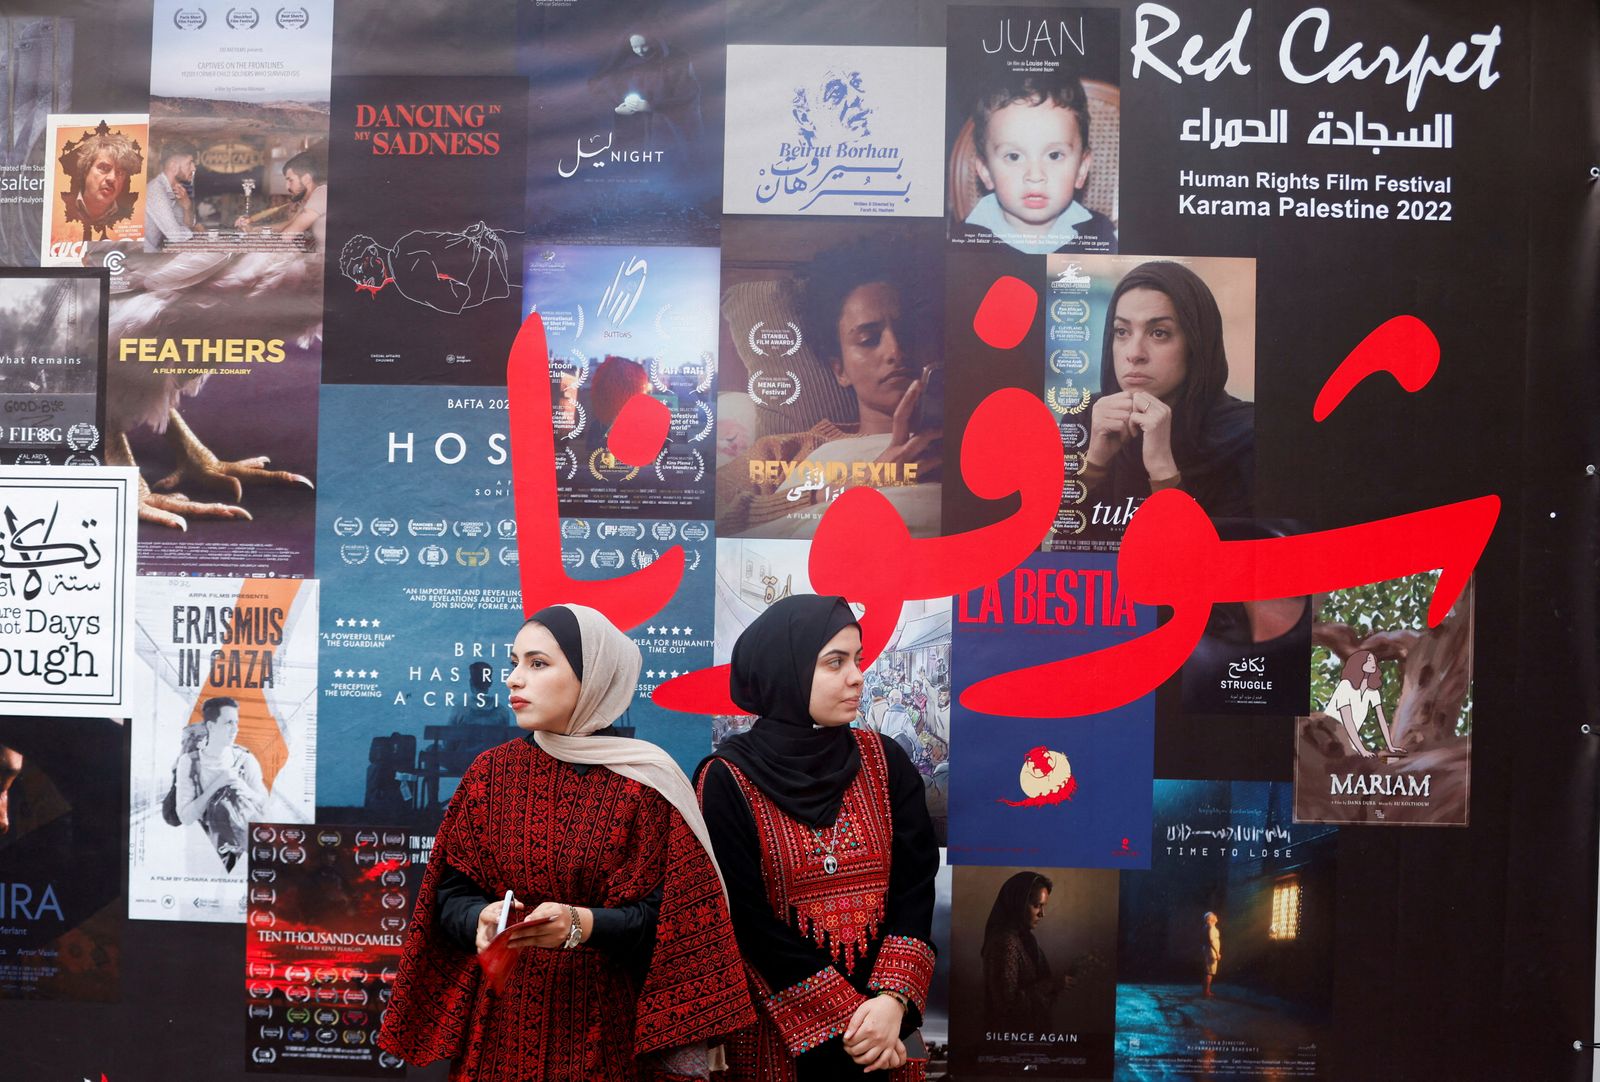 Gazans enjoy rare cinema show, urge cinemas be reopened - REUTERS